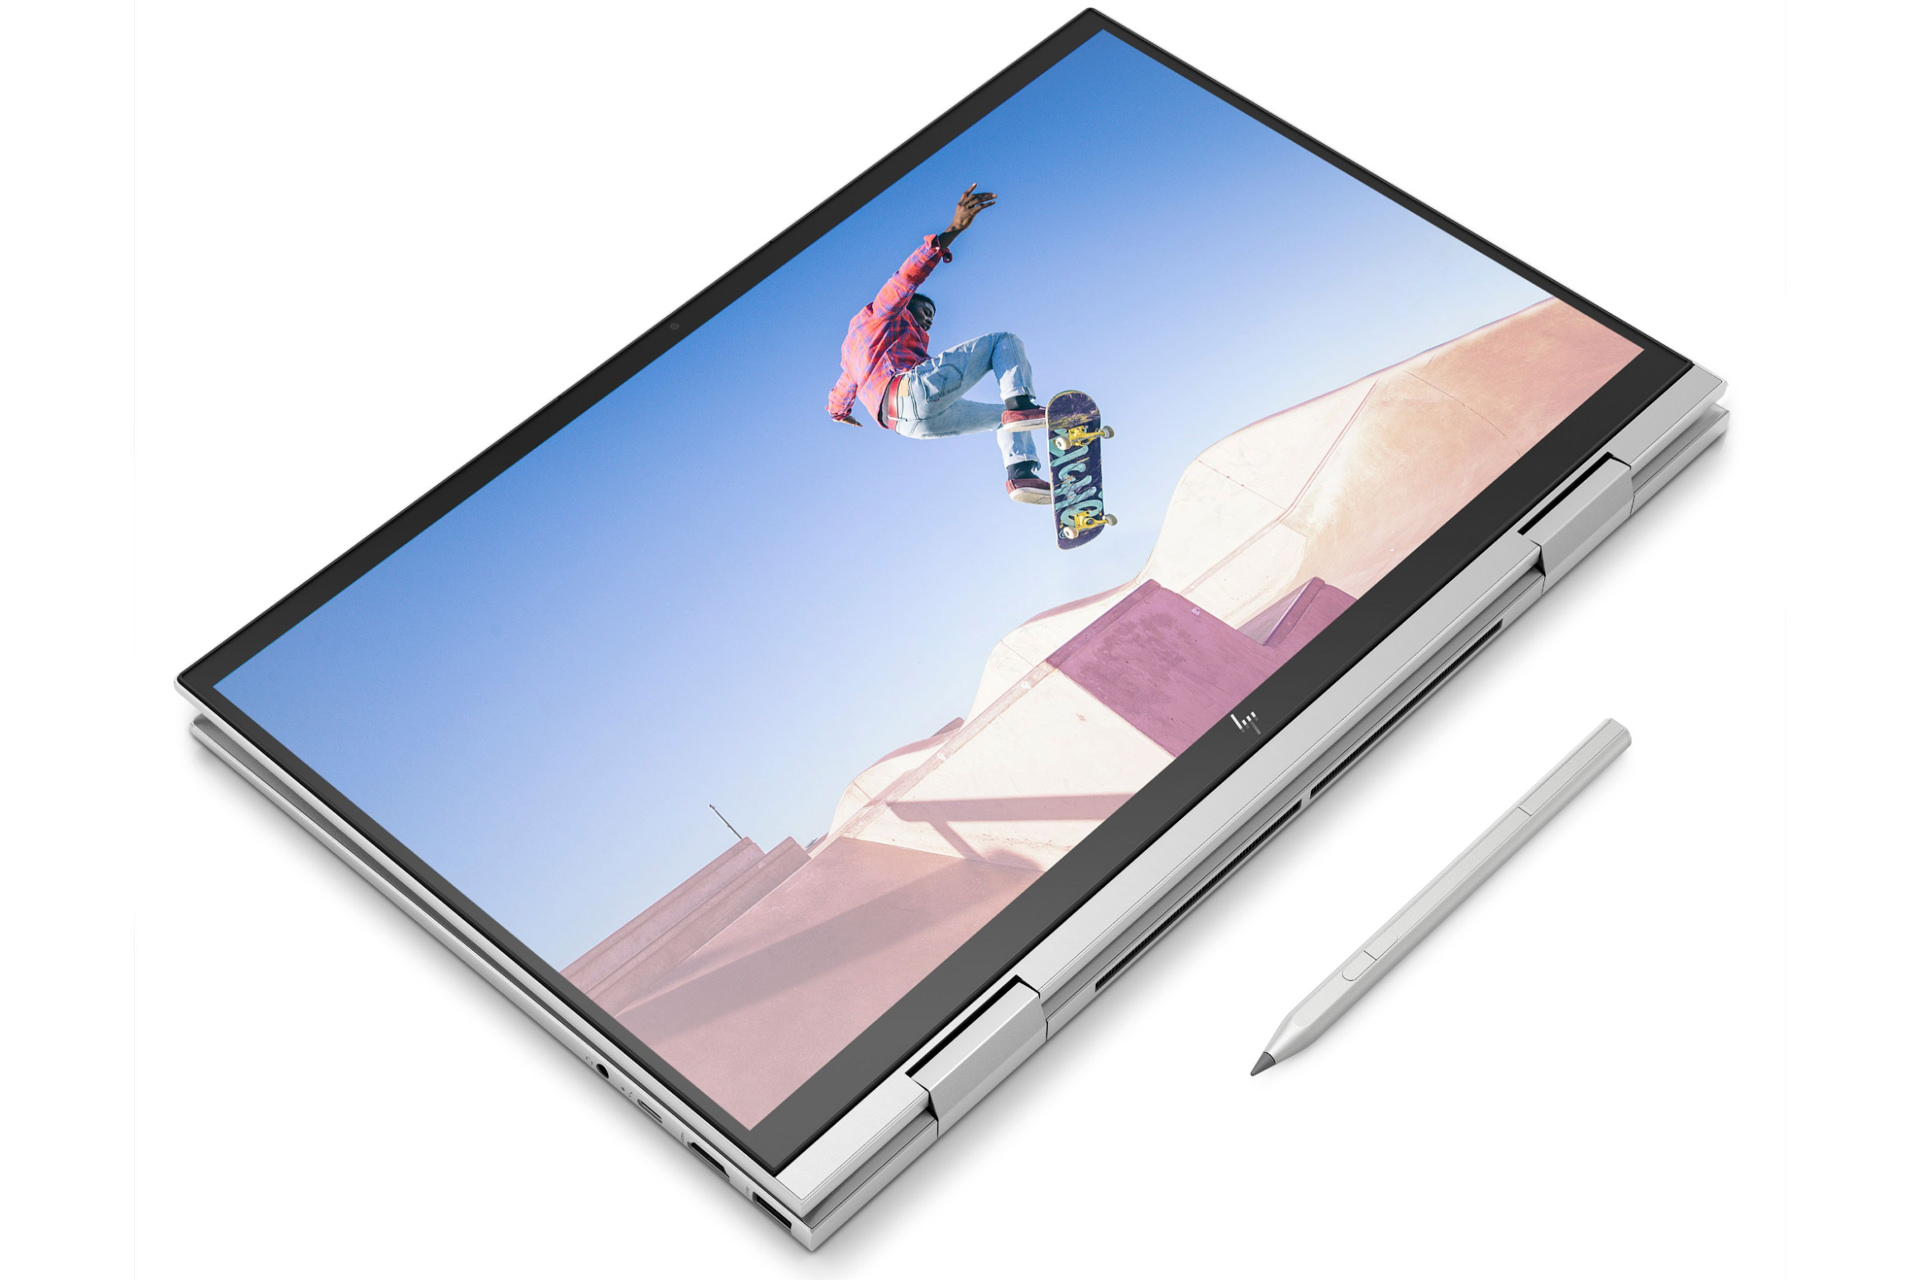 hp envy x360 15 silver model tablet mode with pen - لپ تاپ های تبدیل‌پذیر جدید HP با پردازنده اینتل و AMD رونمایی شدند